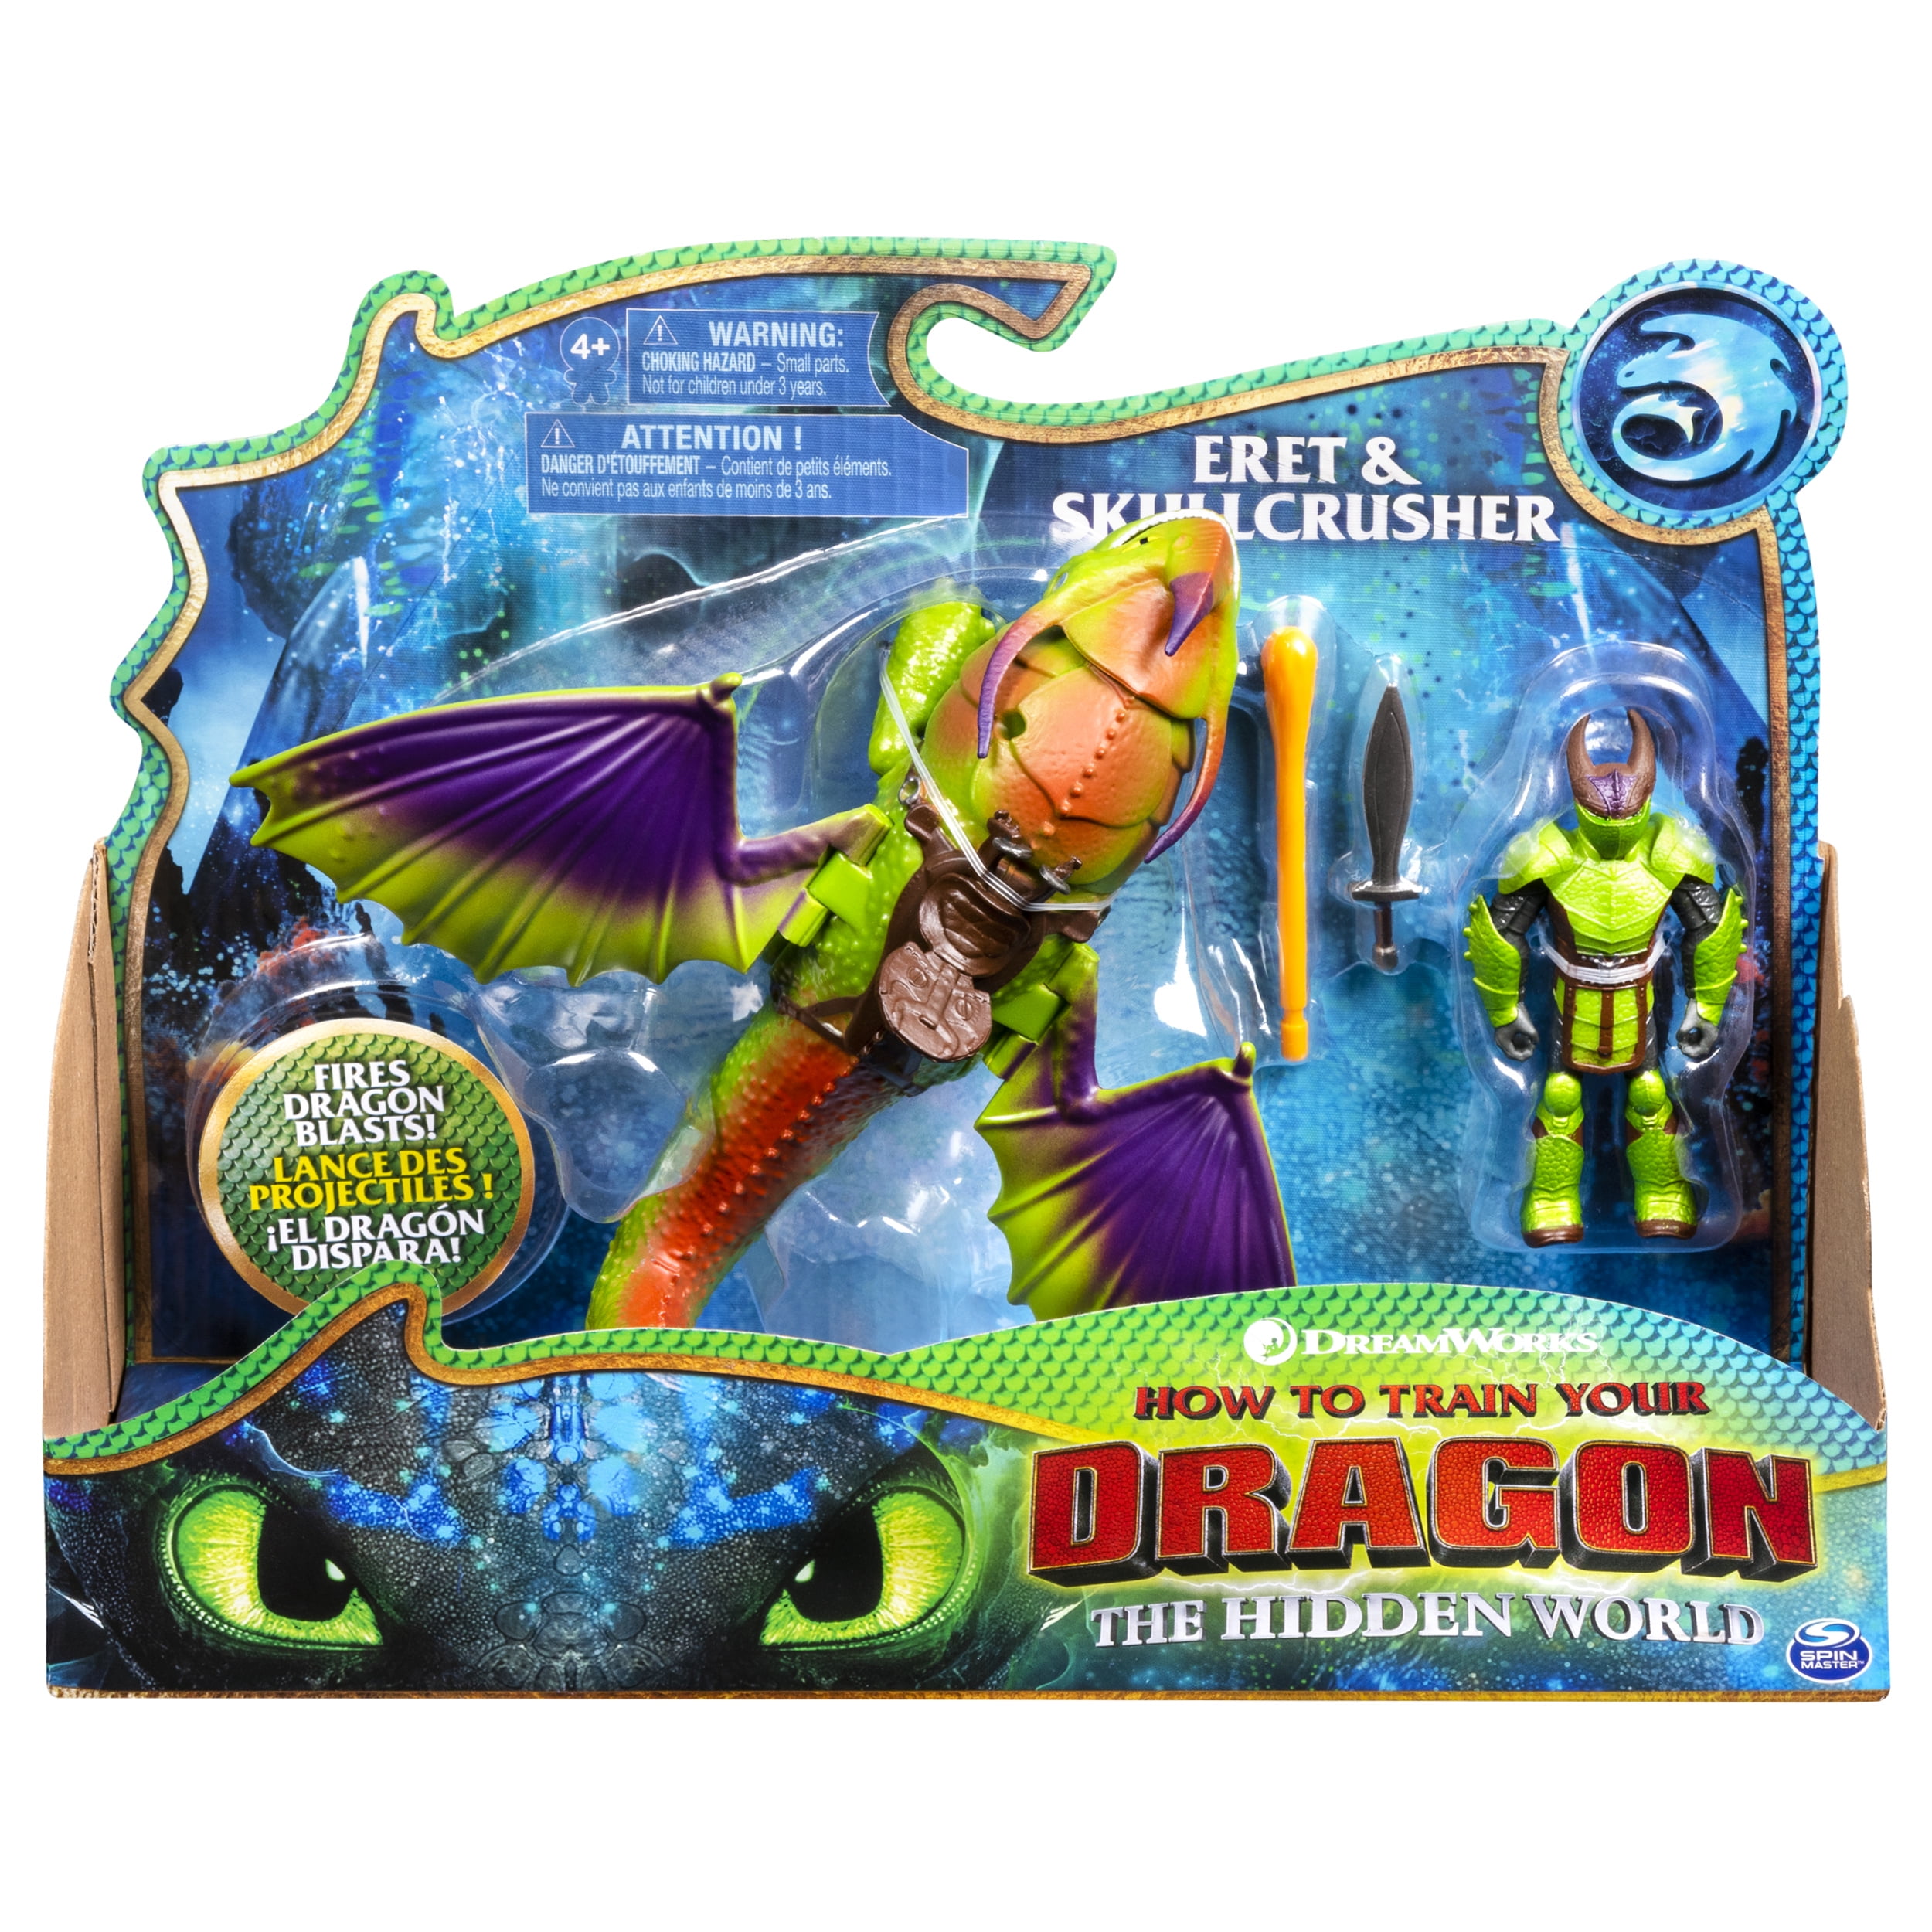 Dreamworks Dragons ERET & SKULLCRUSHER with Armored Viking Toy Figure Playset